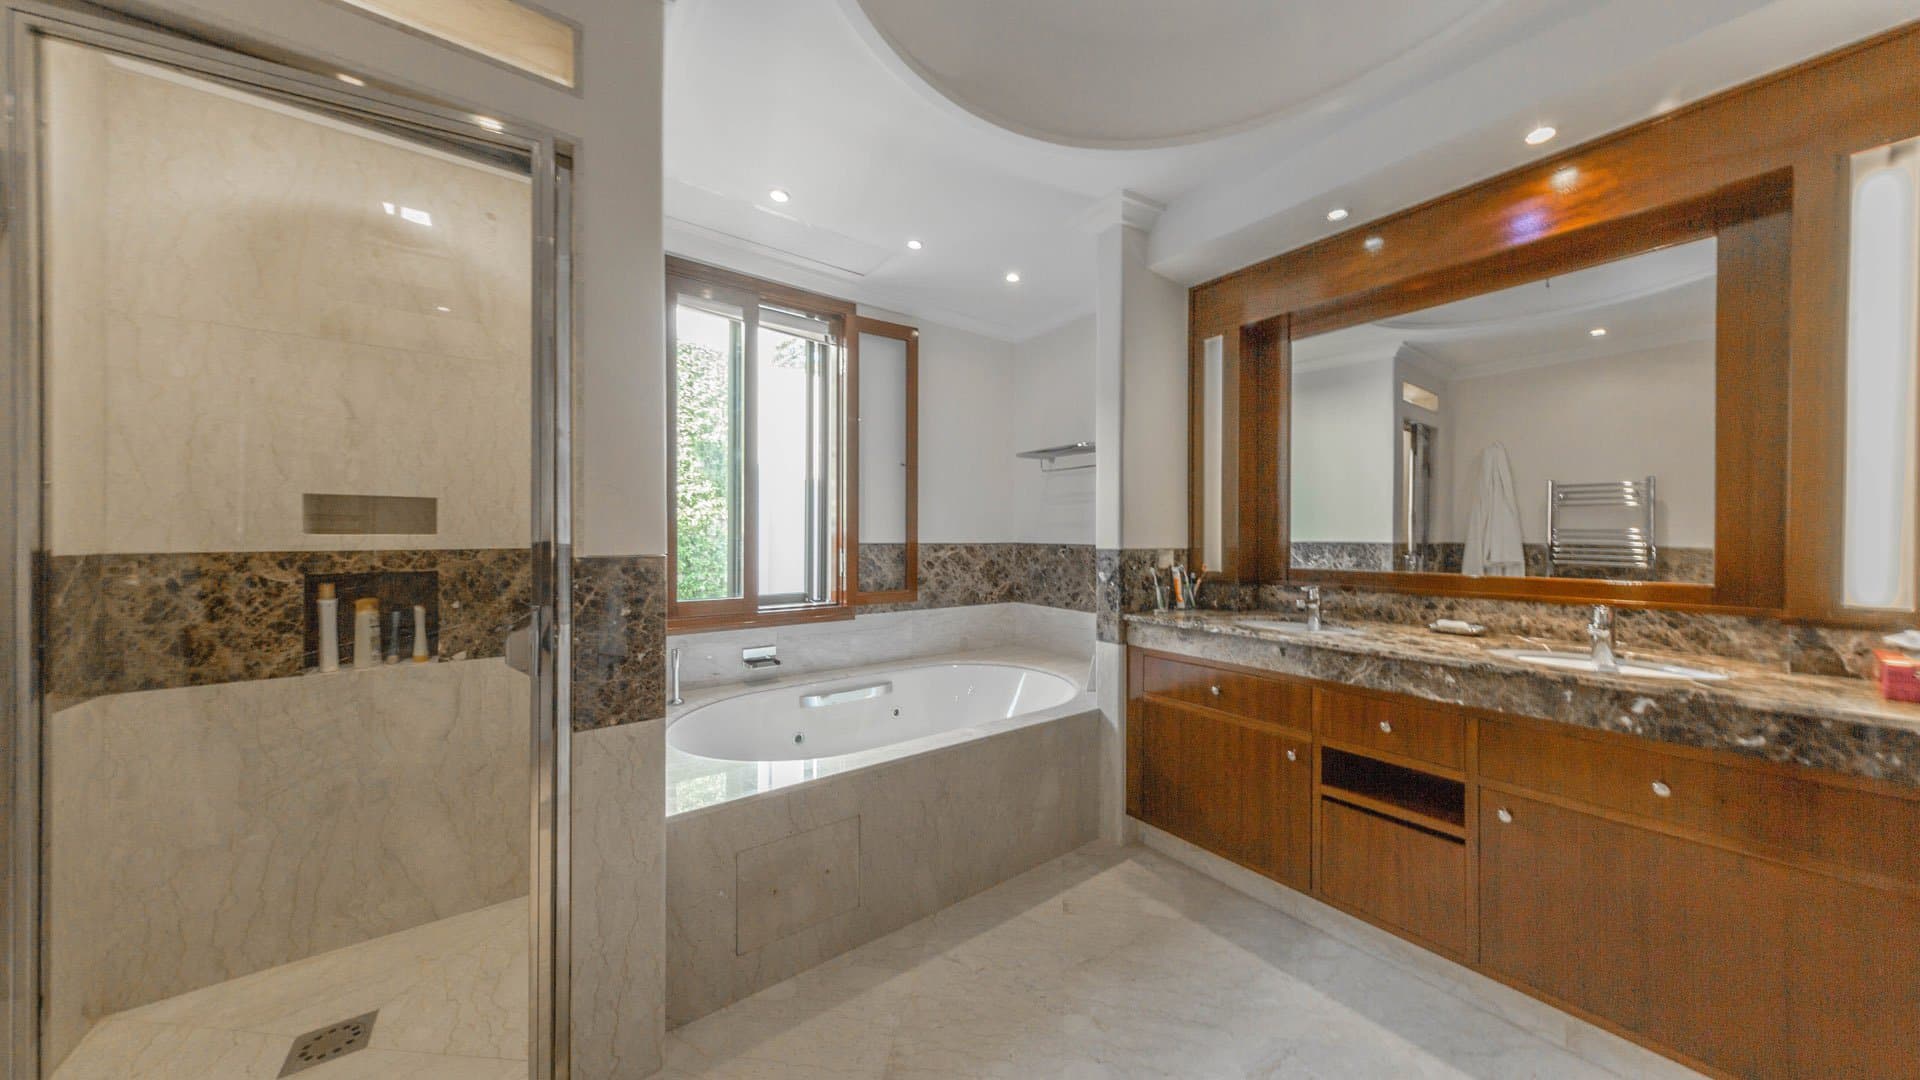 6 Bedroom Villa For Sale Marrakech Lp08699 159765967659b300.jpg